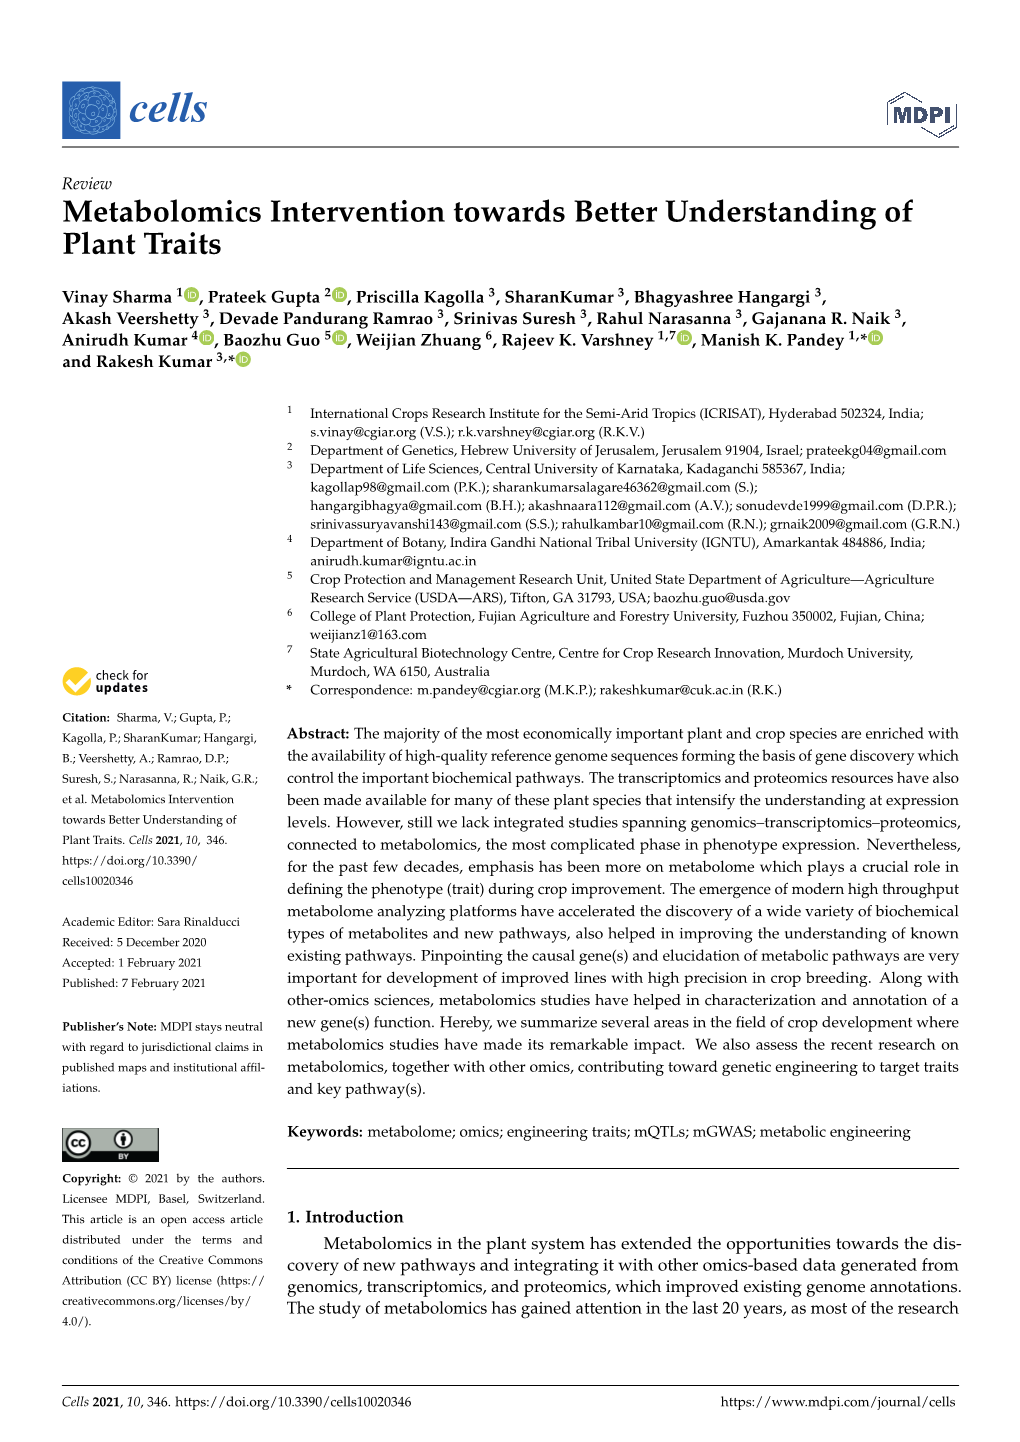 Metabolomics Intervention Towards Better Understanding of Plant Traits